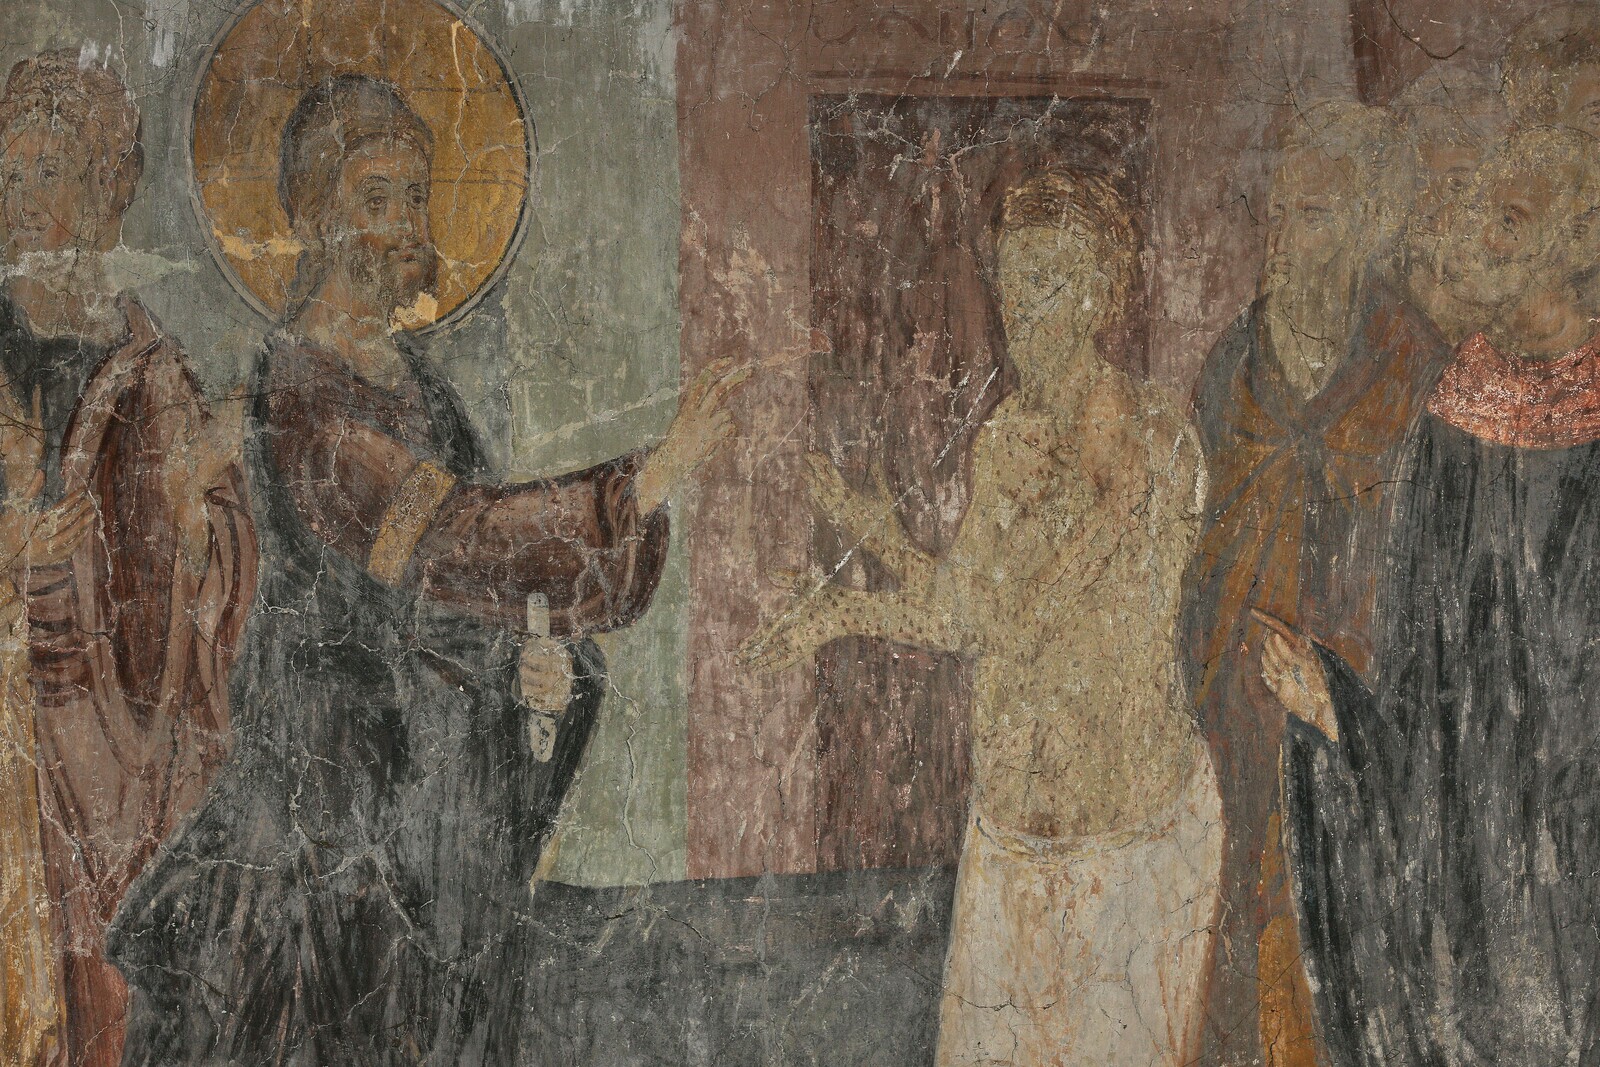 Christ Healing the Leper, detail